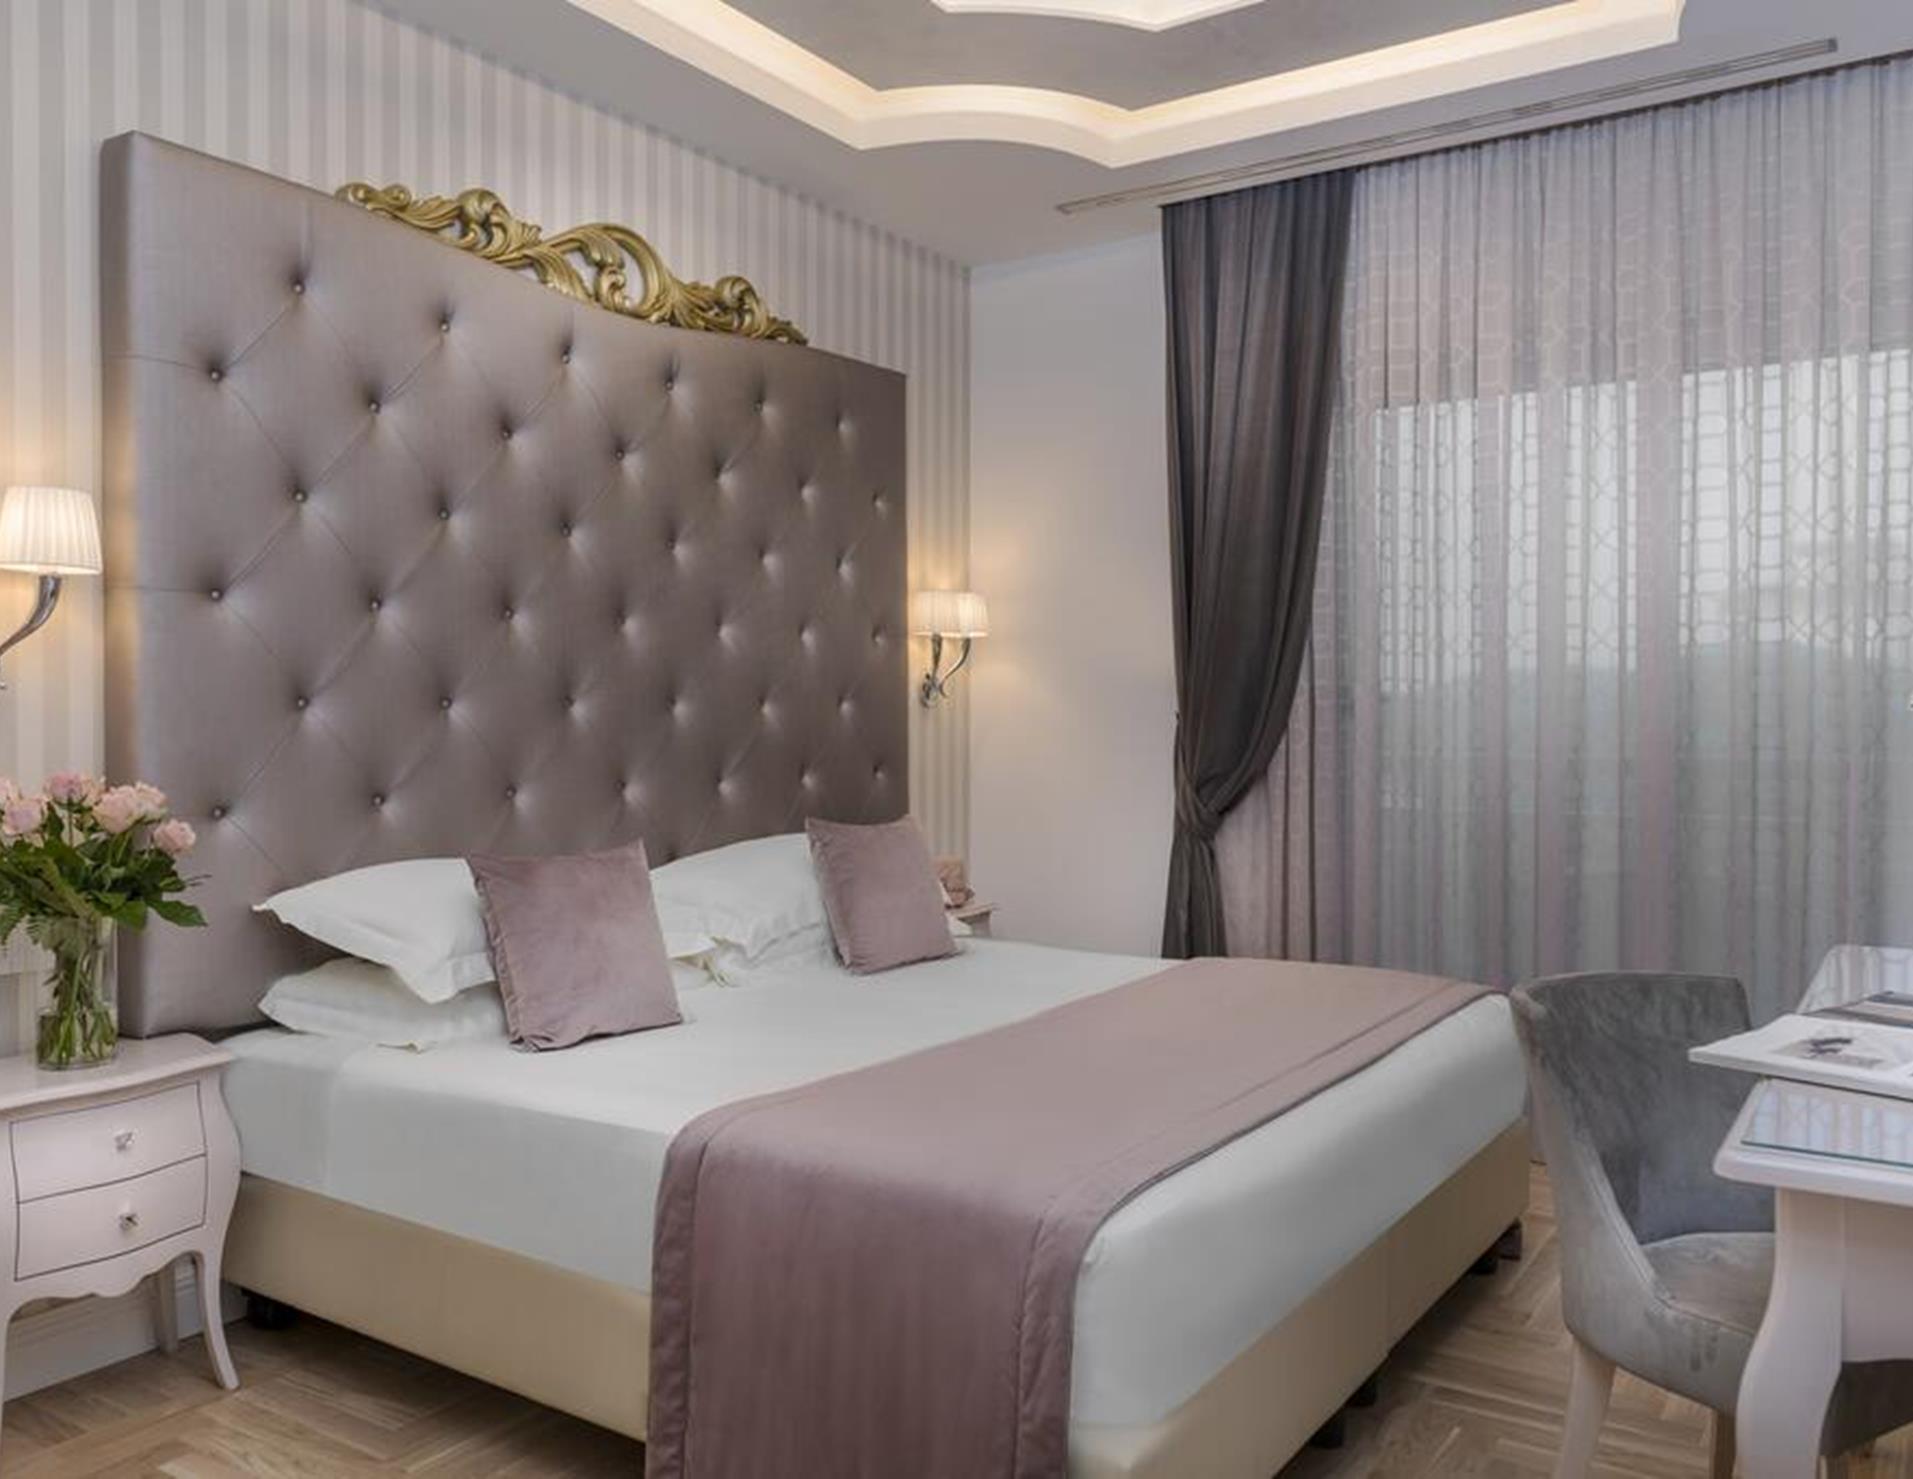 Grand Hotel Gallia - Room 4